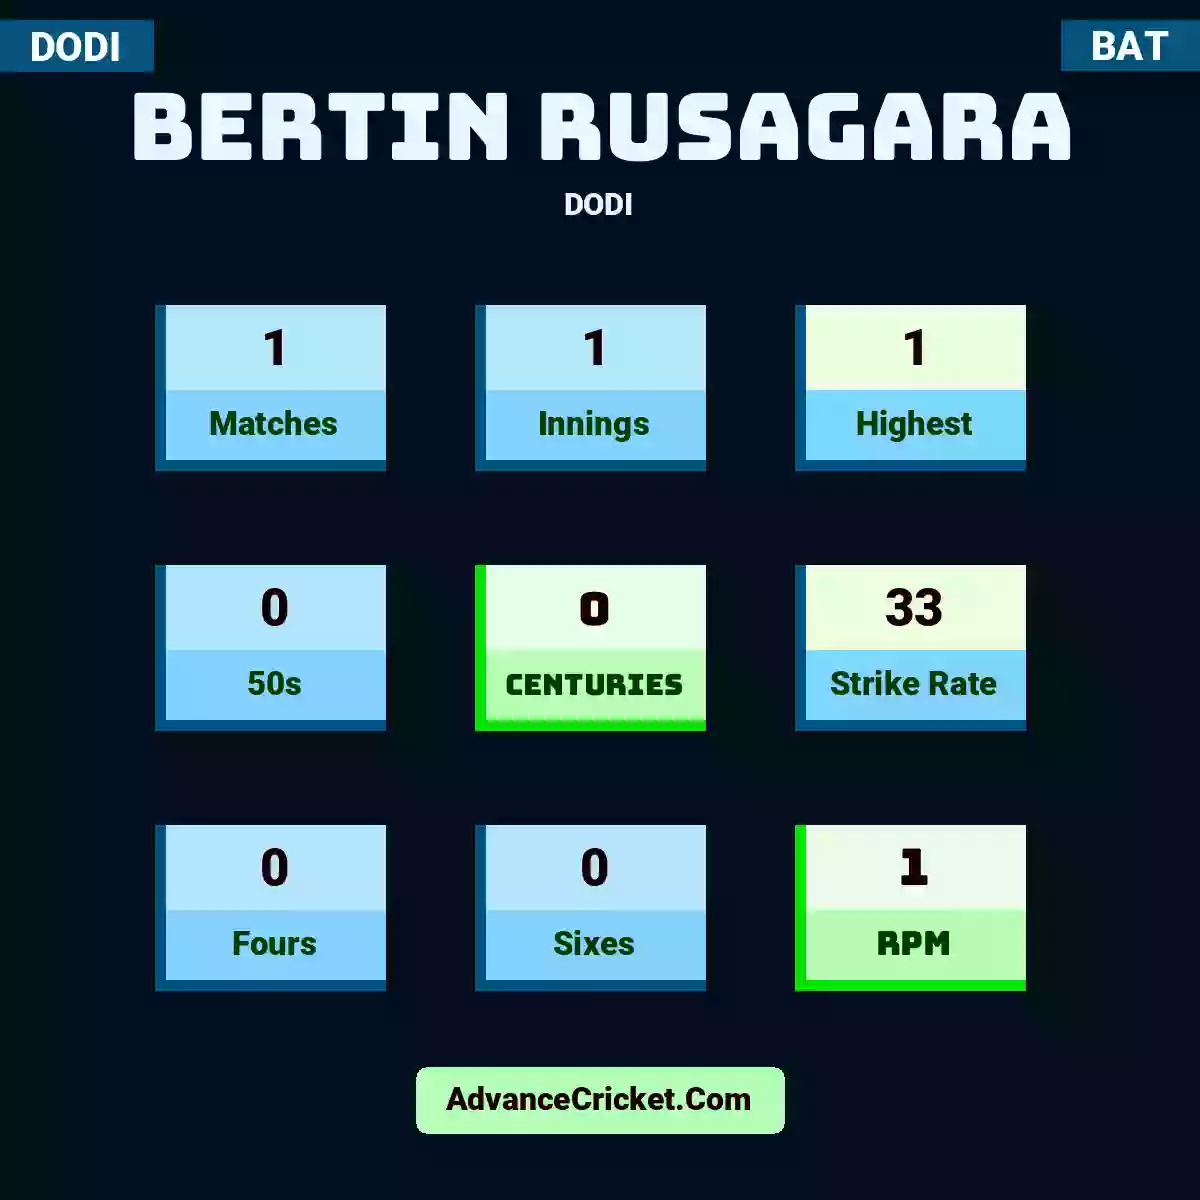 Bertin Rusagara DODI , Bertin Rusagara played 1 matches, scored 1 runs as highest, 0 half-centuries, and 0 centuries, with a strike rate of 33. B.Rusagara hit 0 fours and 0 sixes, with an RPM of 1.